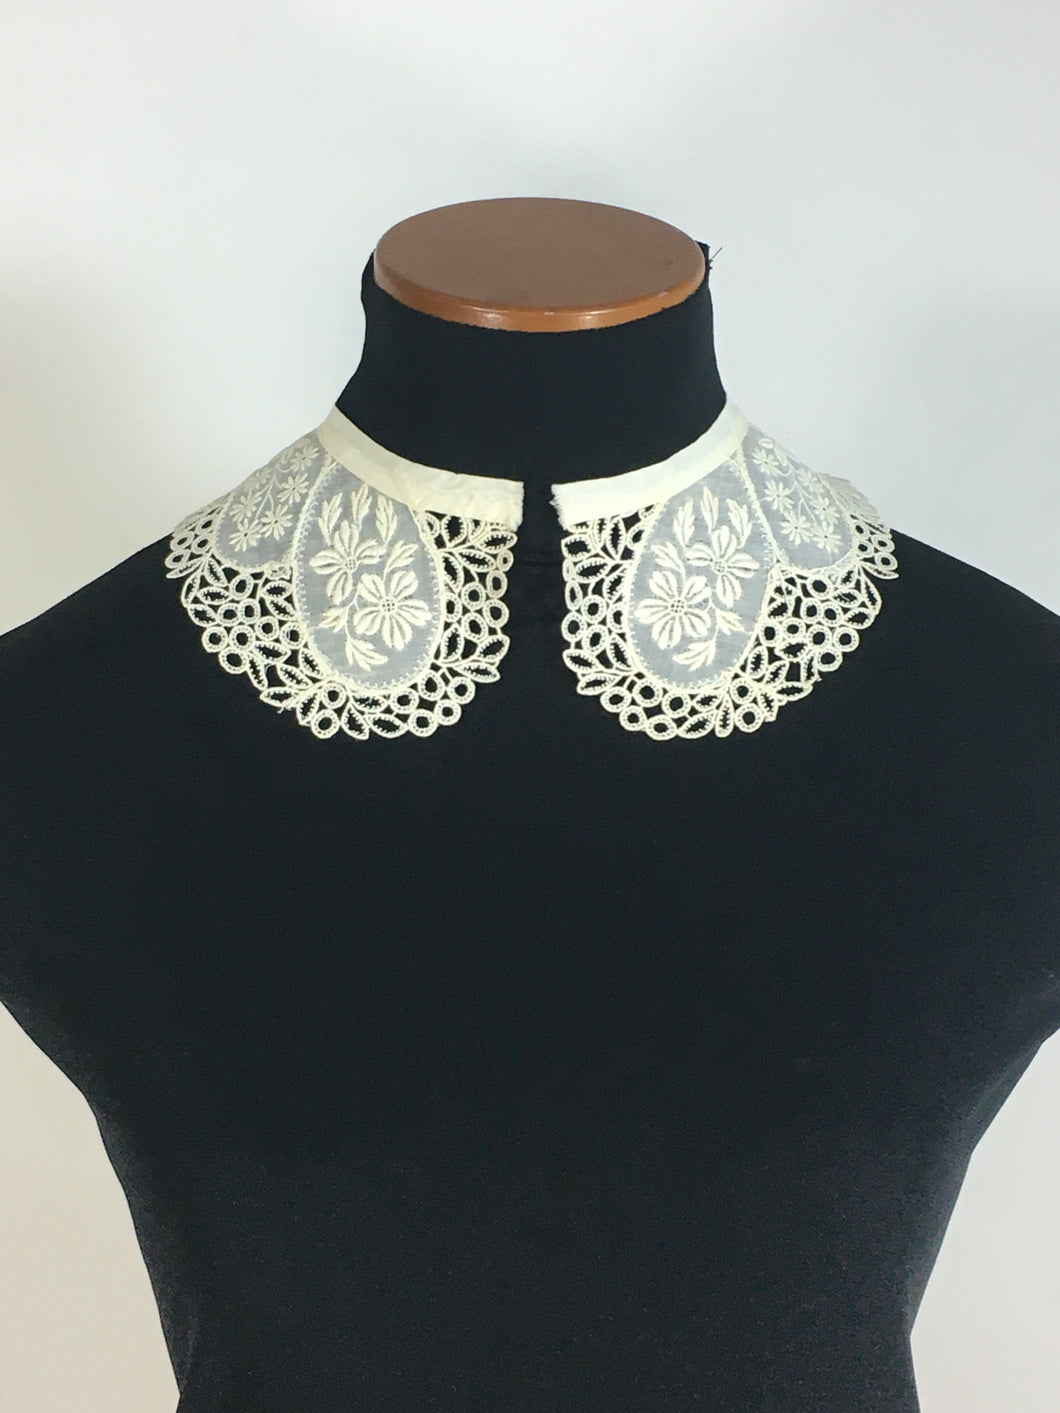 1900's-1910 Edwardian handmade Ivory lace Peter Pan or Bertha style collar & cuffs